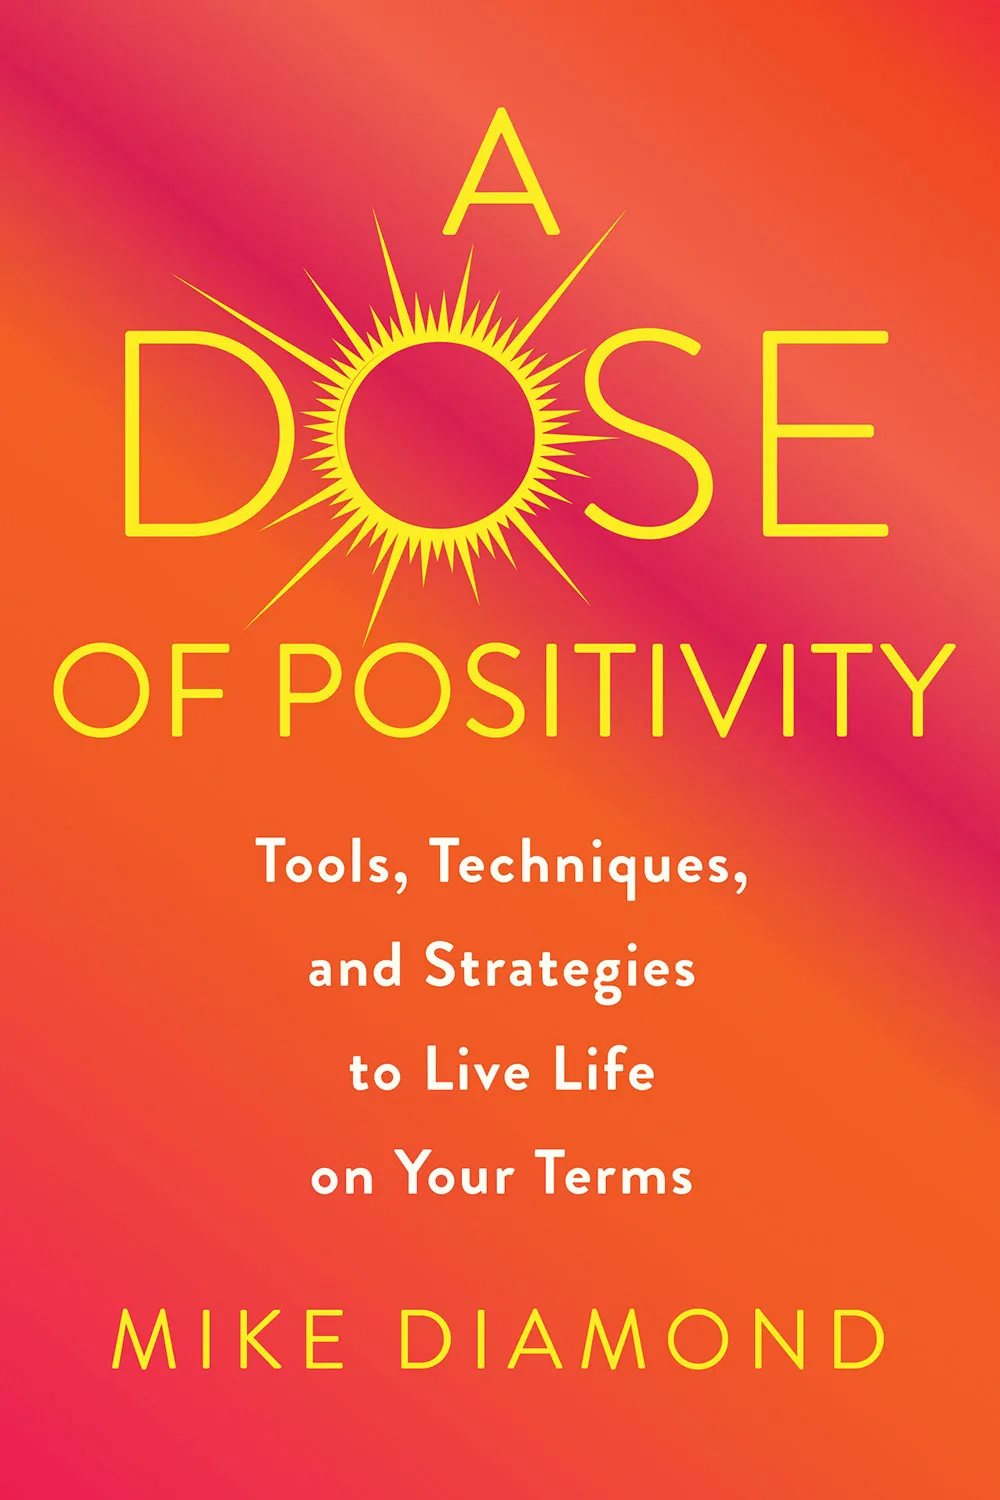 A Dose of Positivity